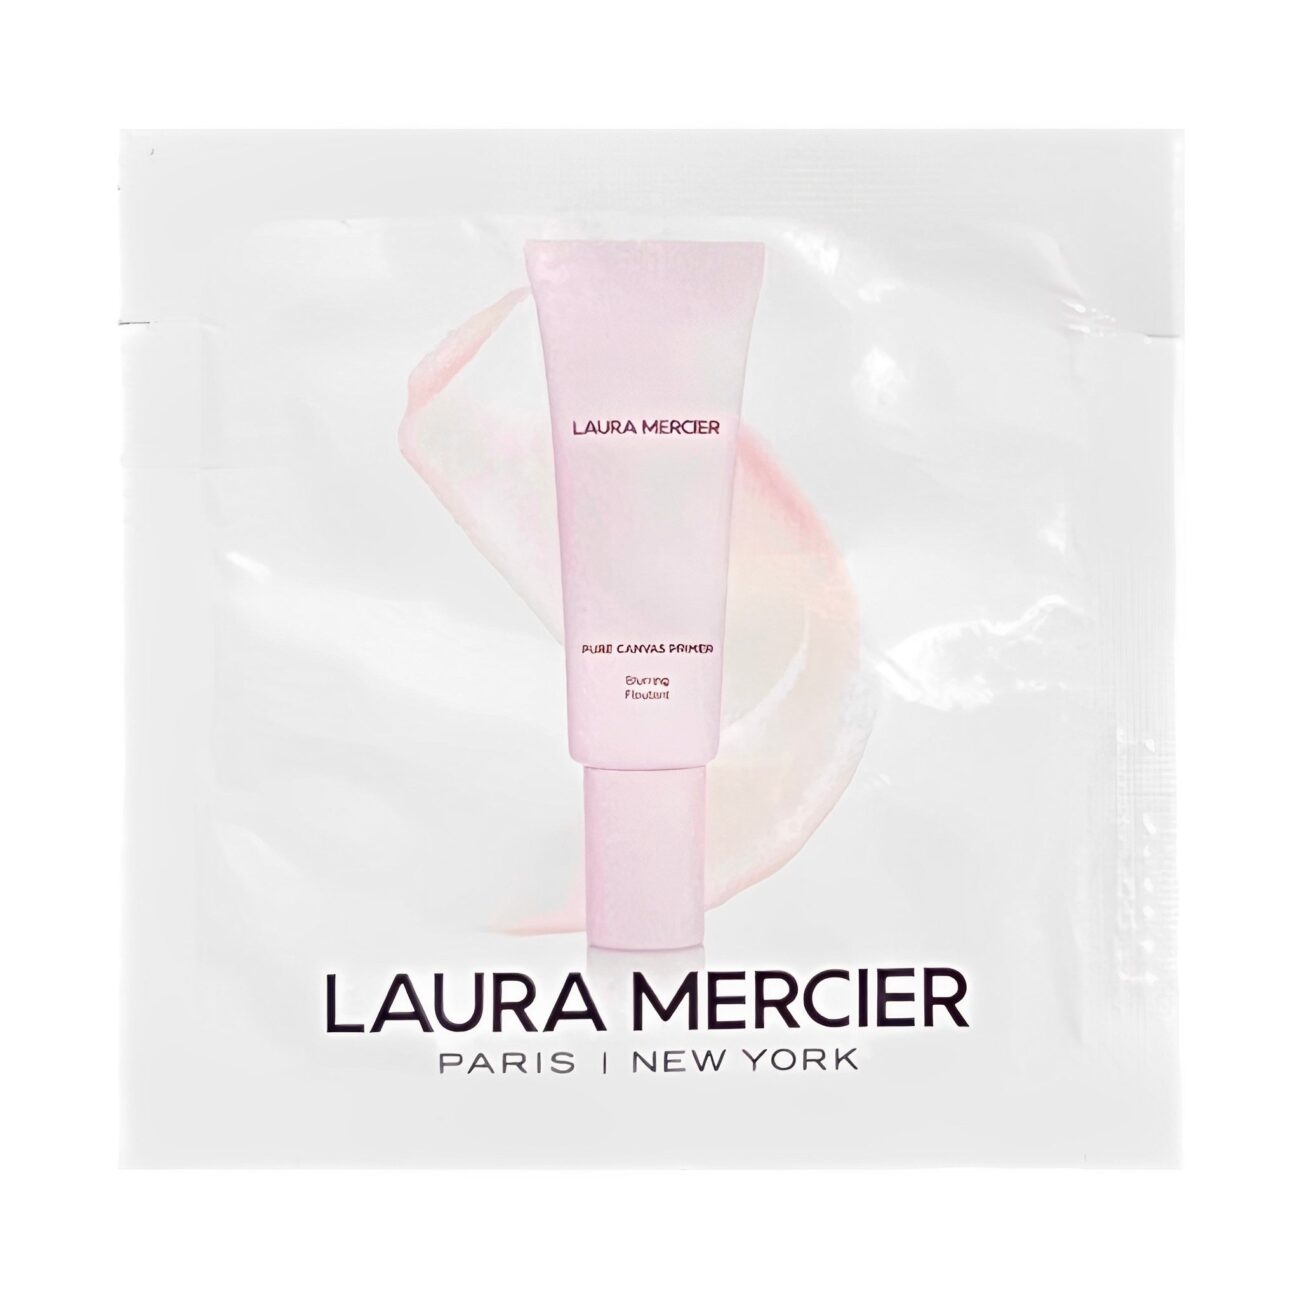 Pure Canvas Primer Sample - Blurring-Laura Mercier